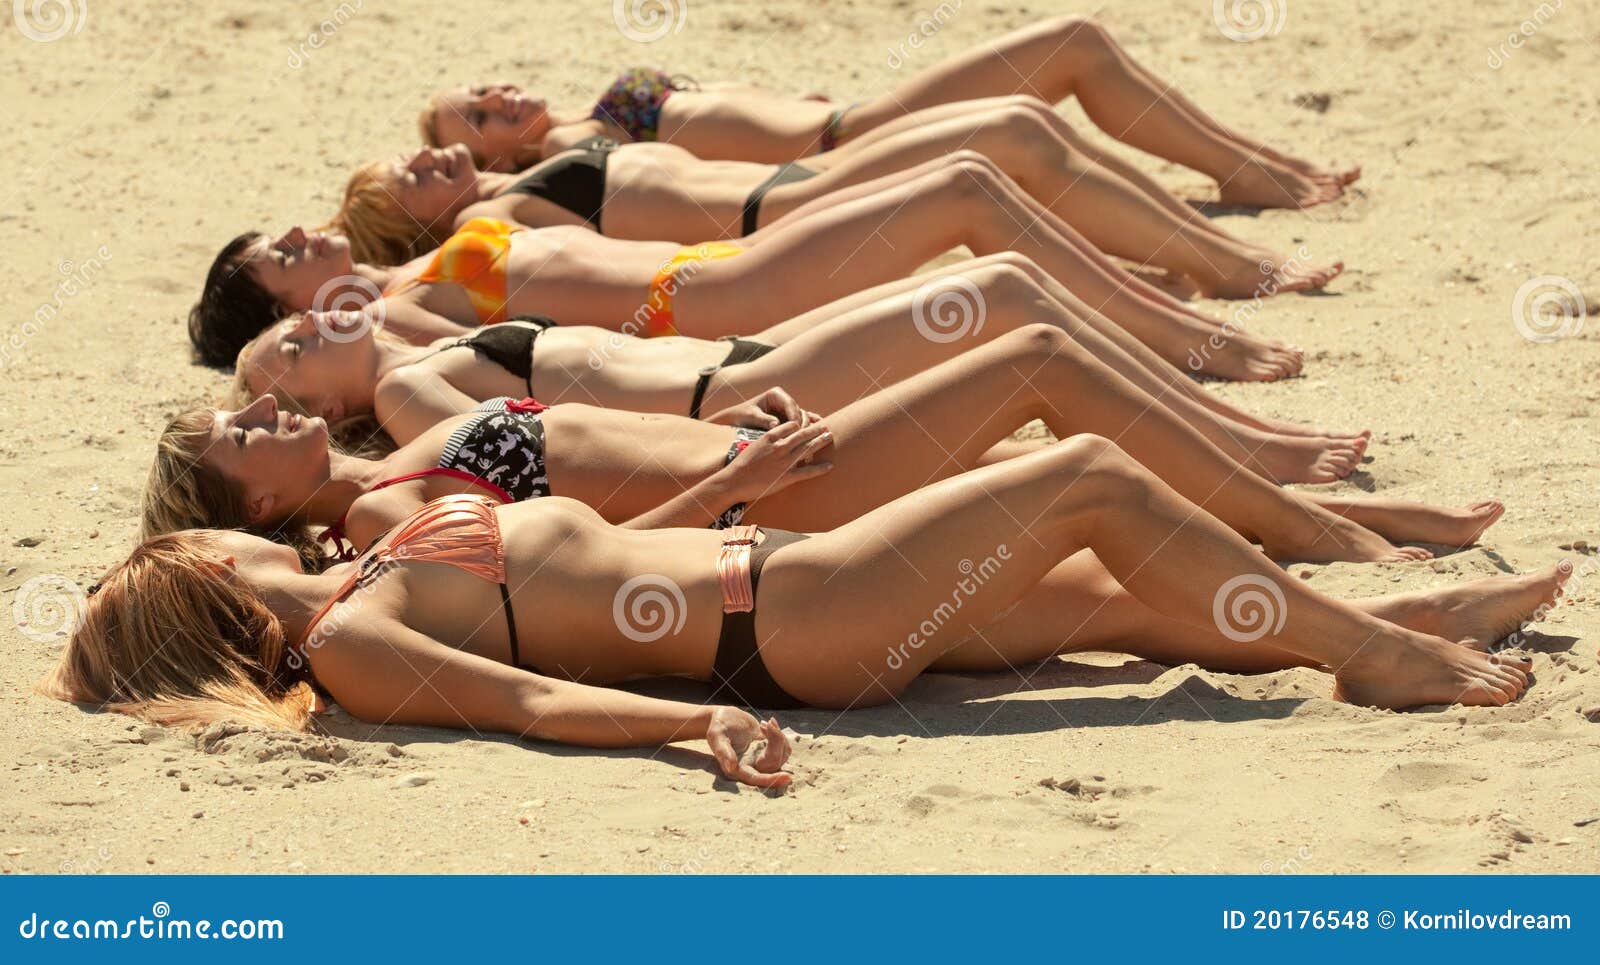 barefoot beach girls voyeur